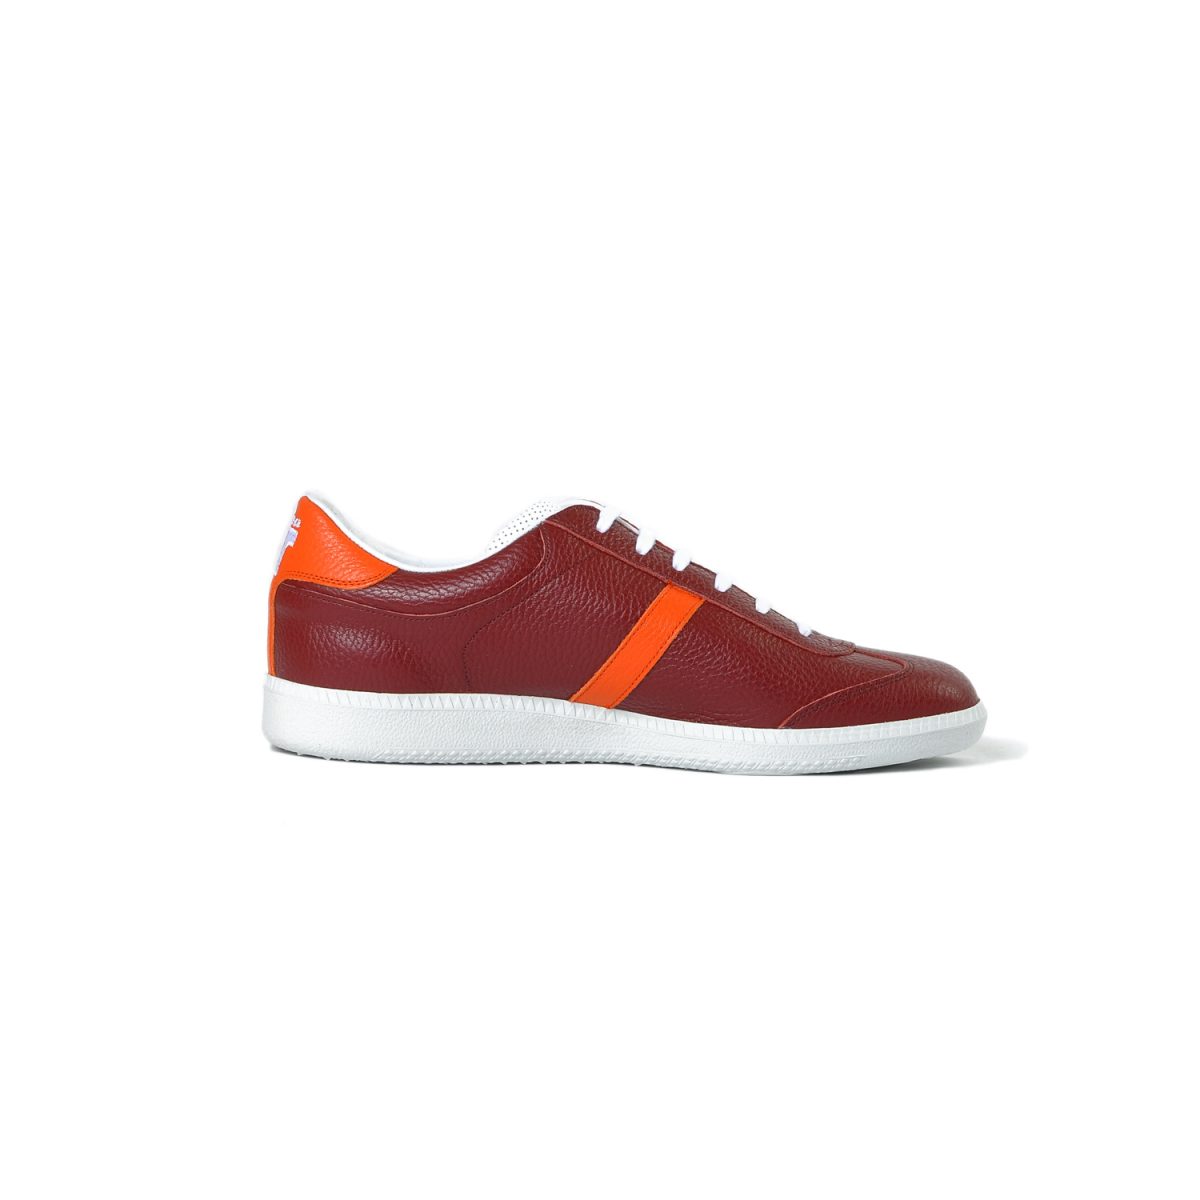 Tisza cipő - Compakt - Burgundi-narancs